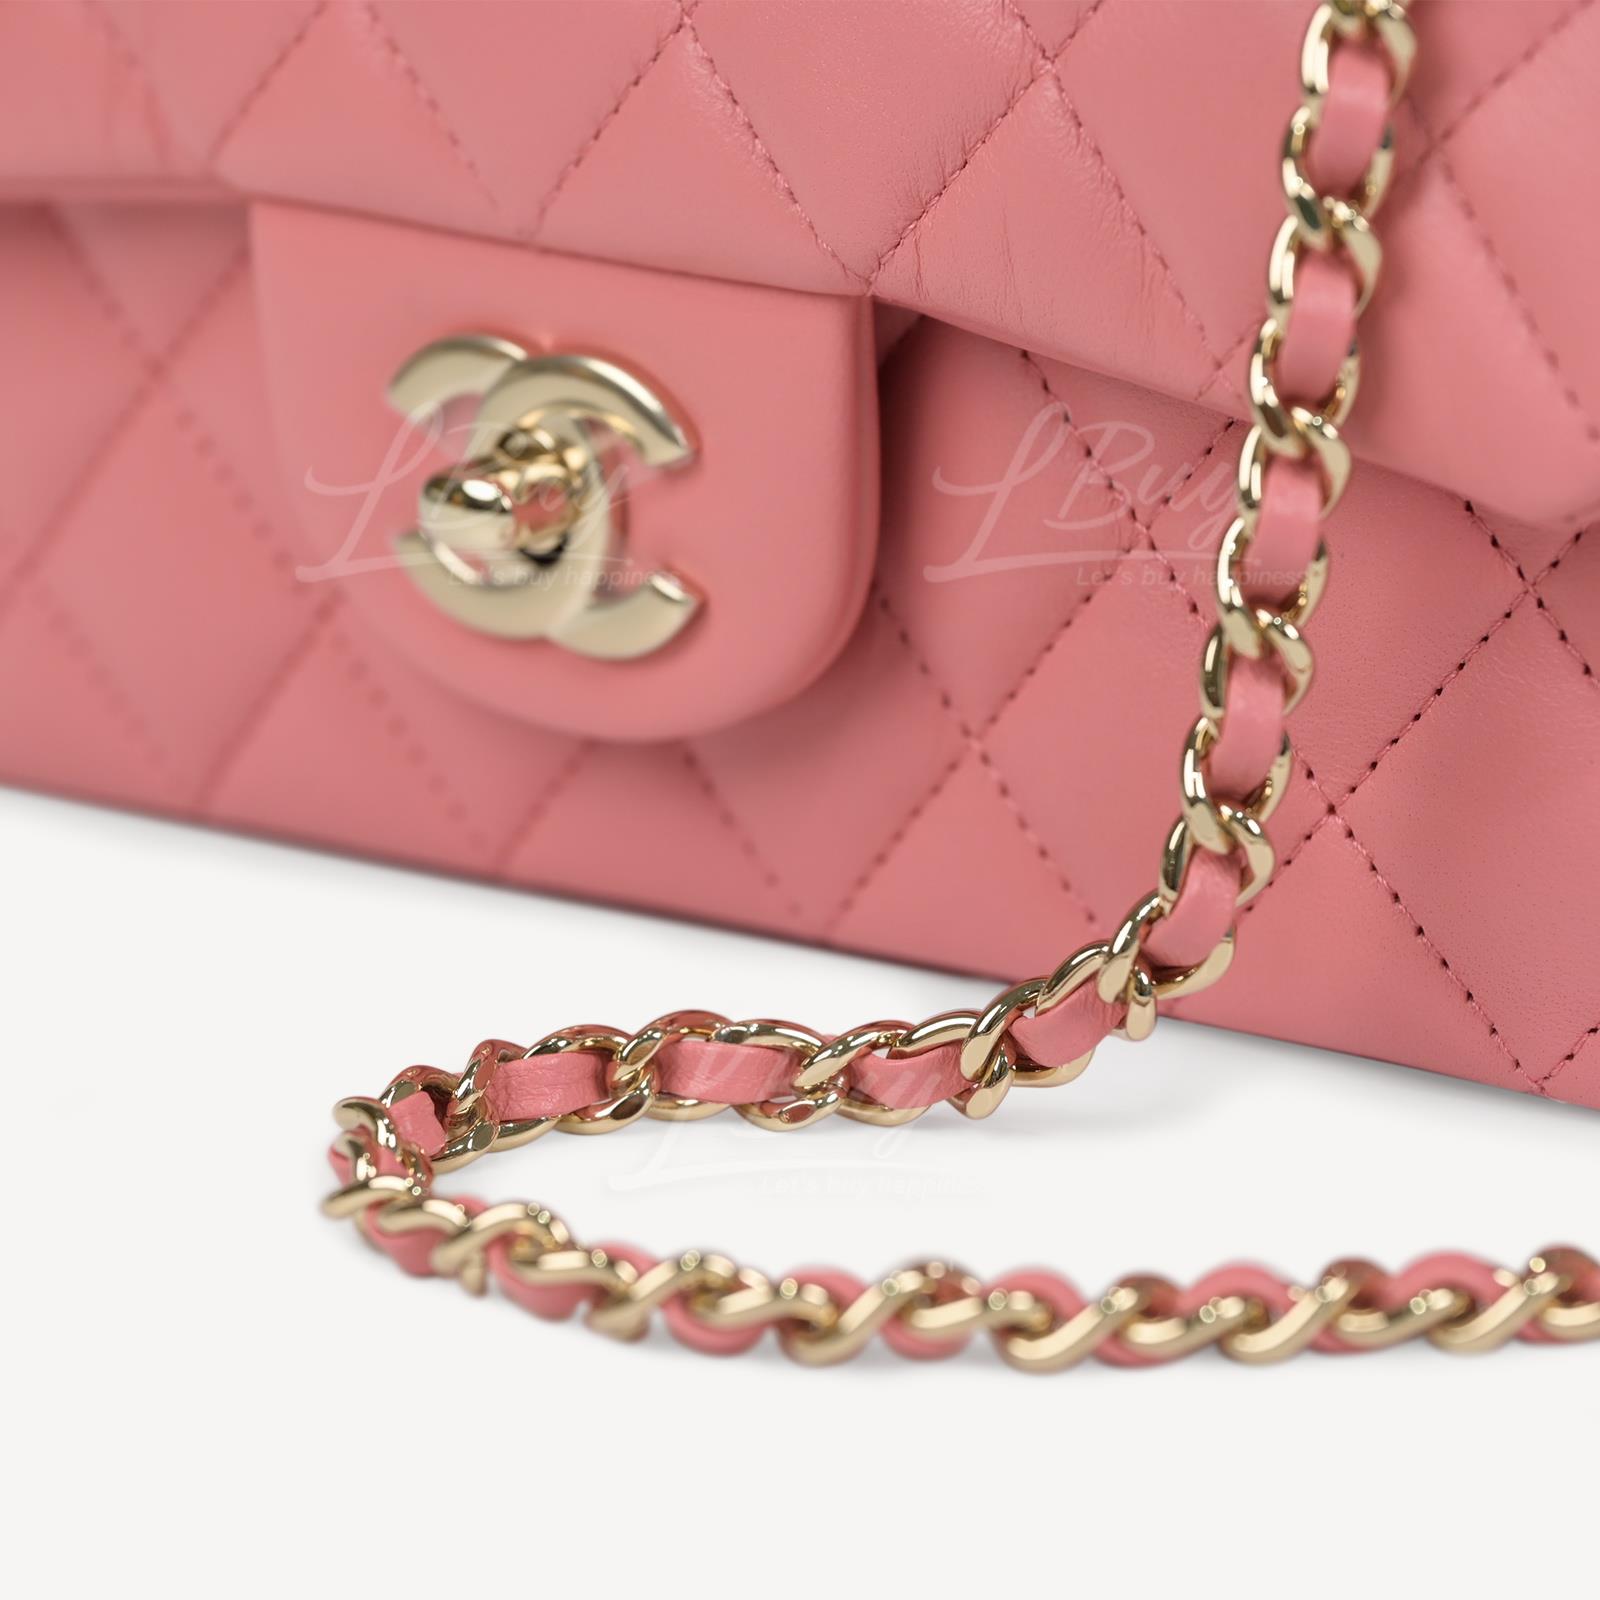 NIB 22C Chanel Pearl Crush Square Mini Flap Bag GHW Peachy, 57% OFF